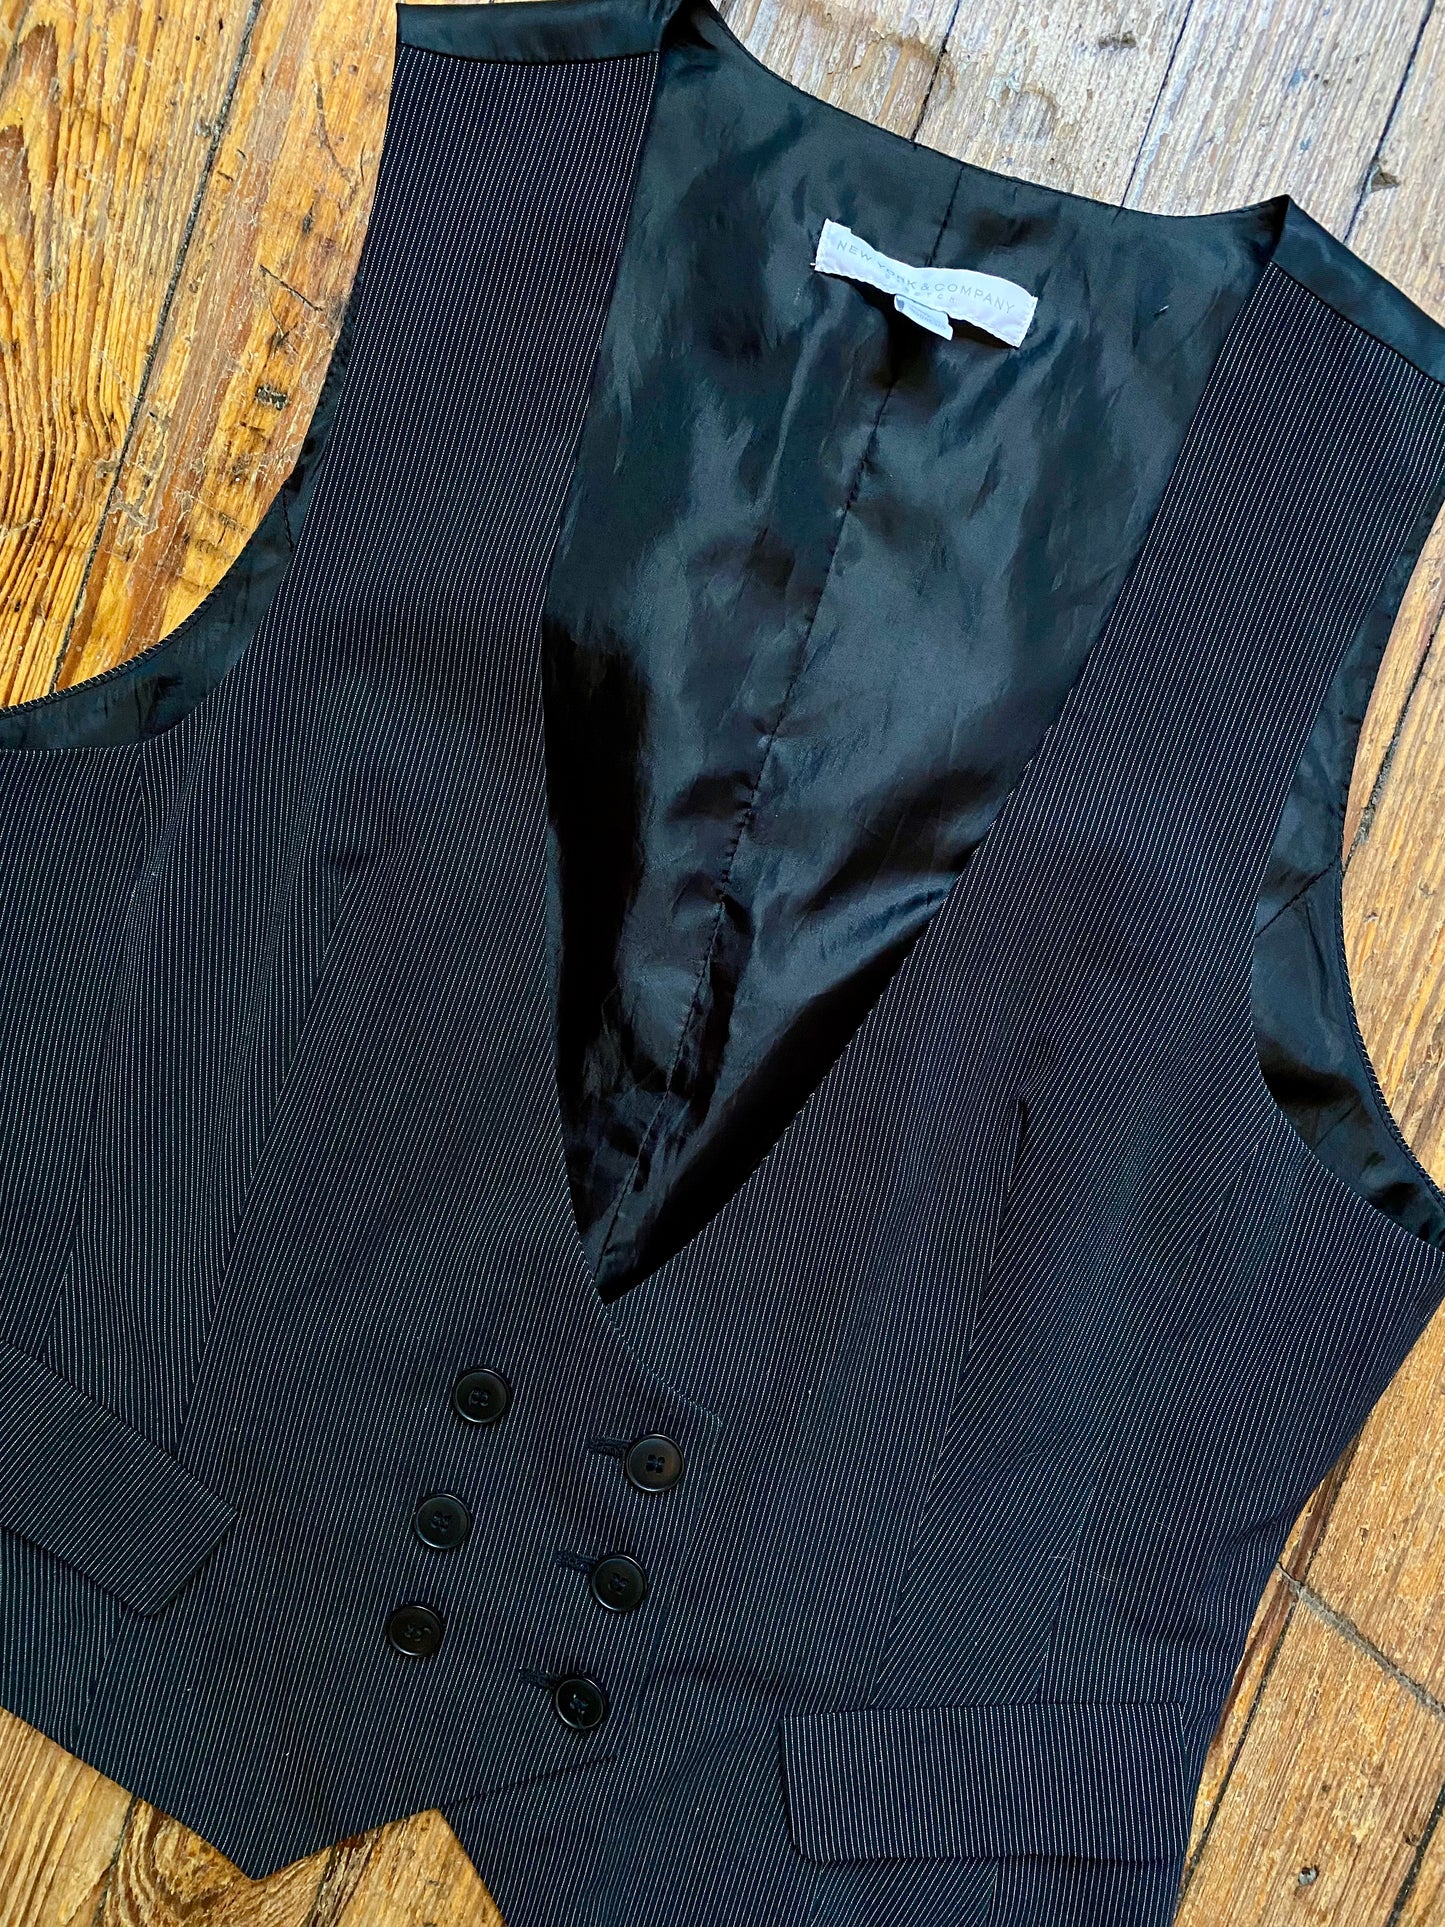 Black w/ White Pin Stripe Satin Vest